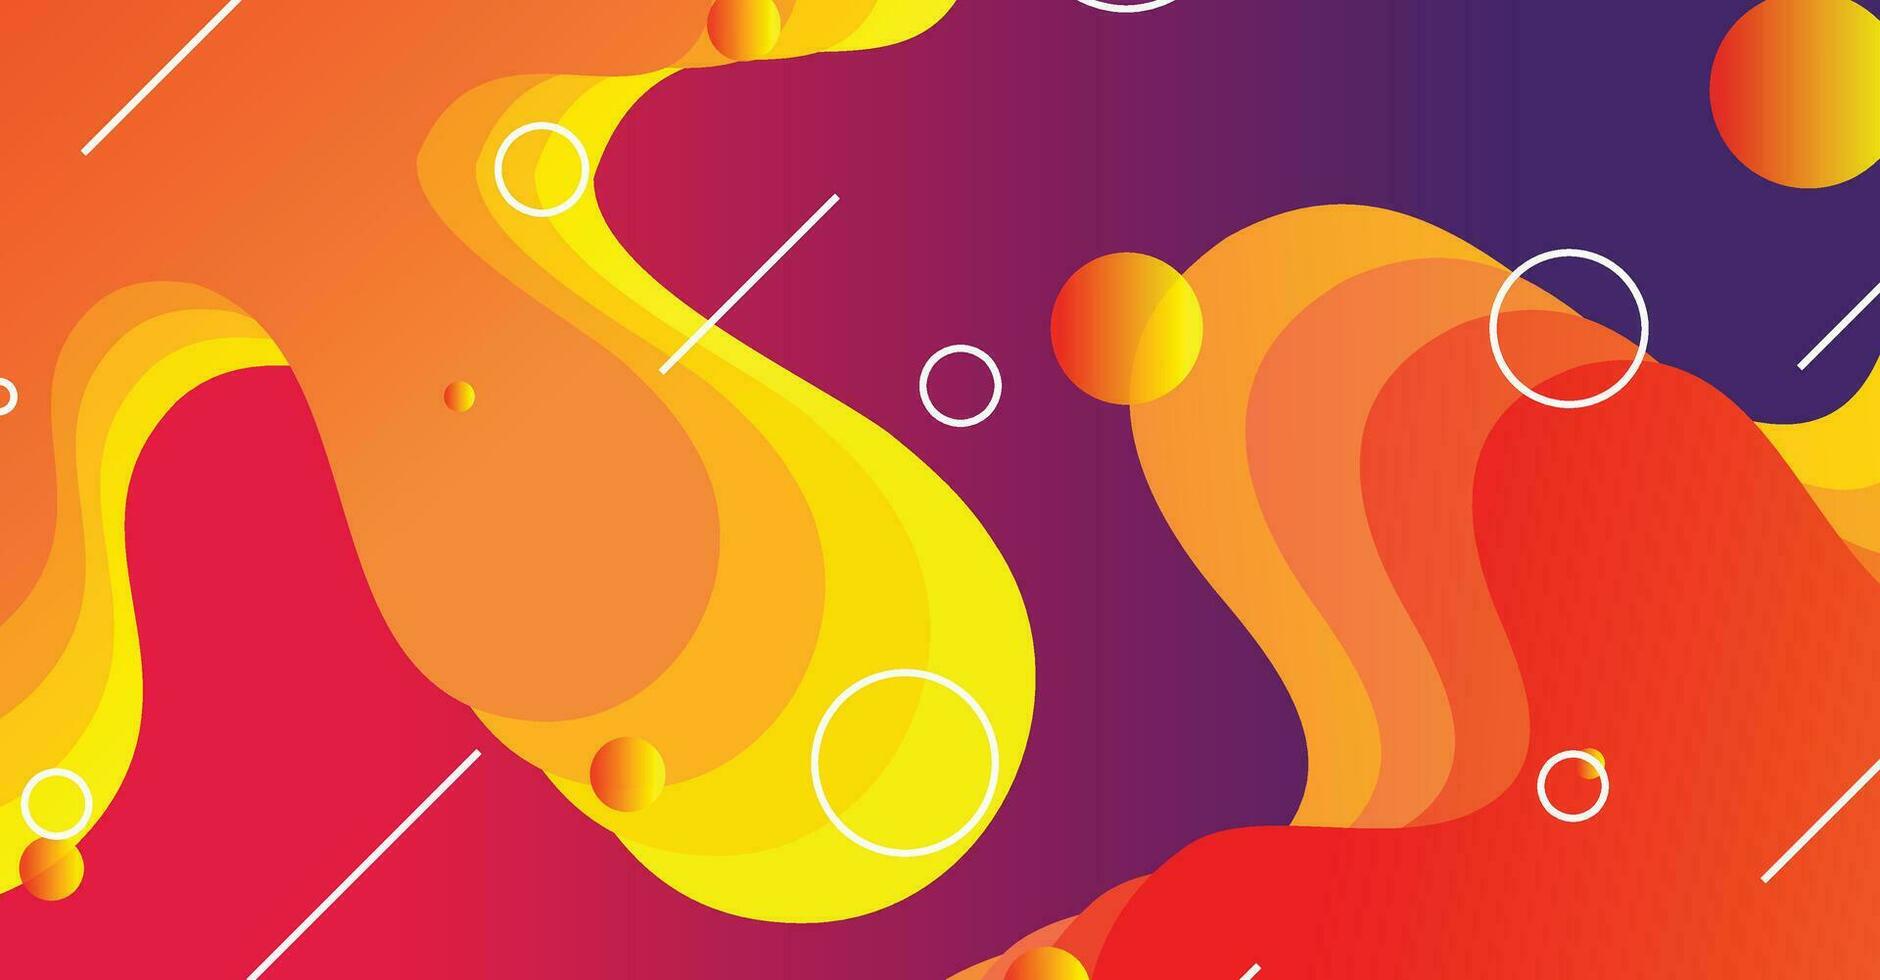 abstrakt flytande Vinka bakgrund med färgrik bakgrund vektor